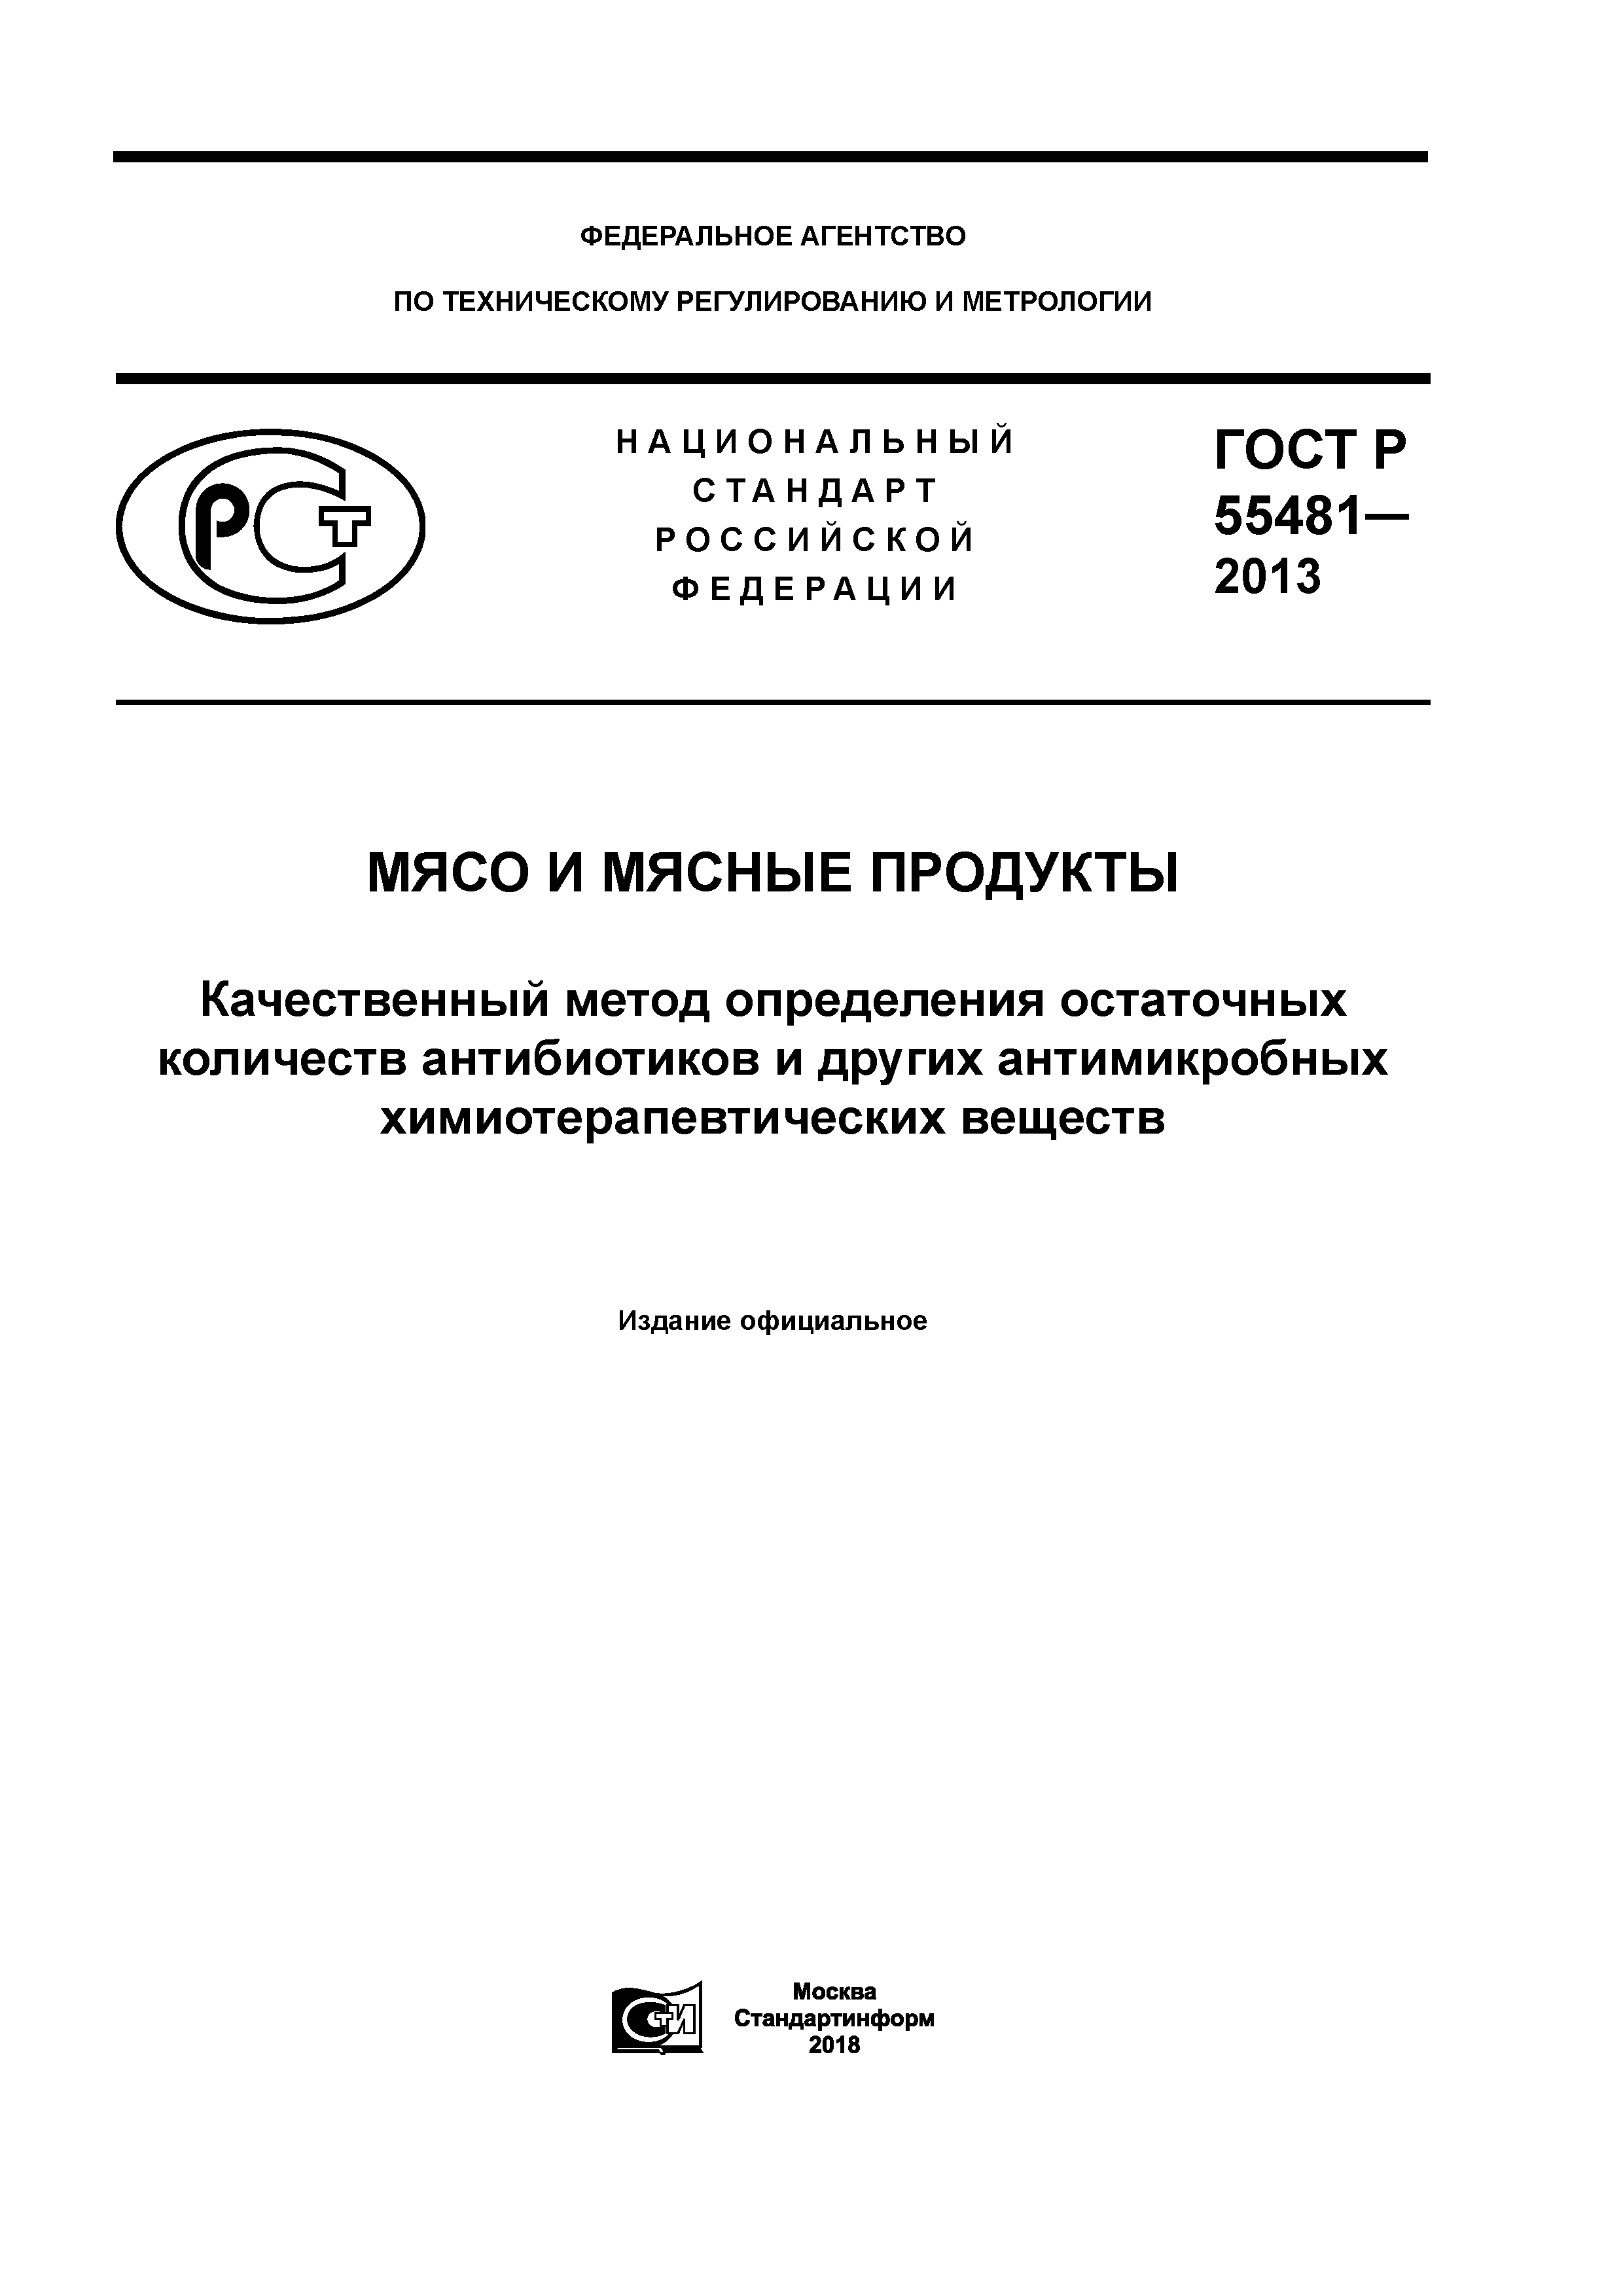 ГОСТ Р 55481-2013